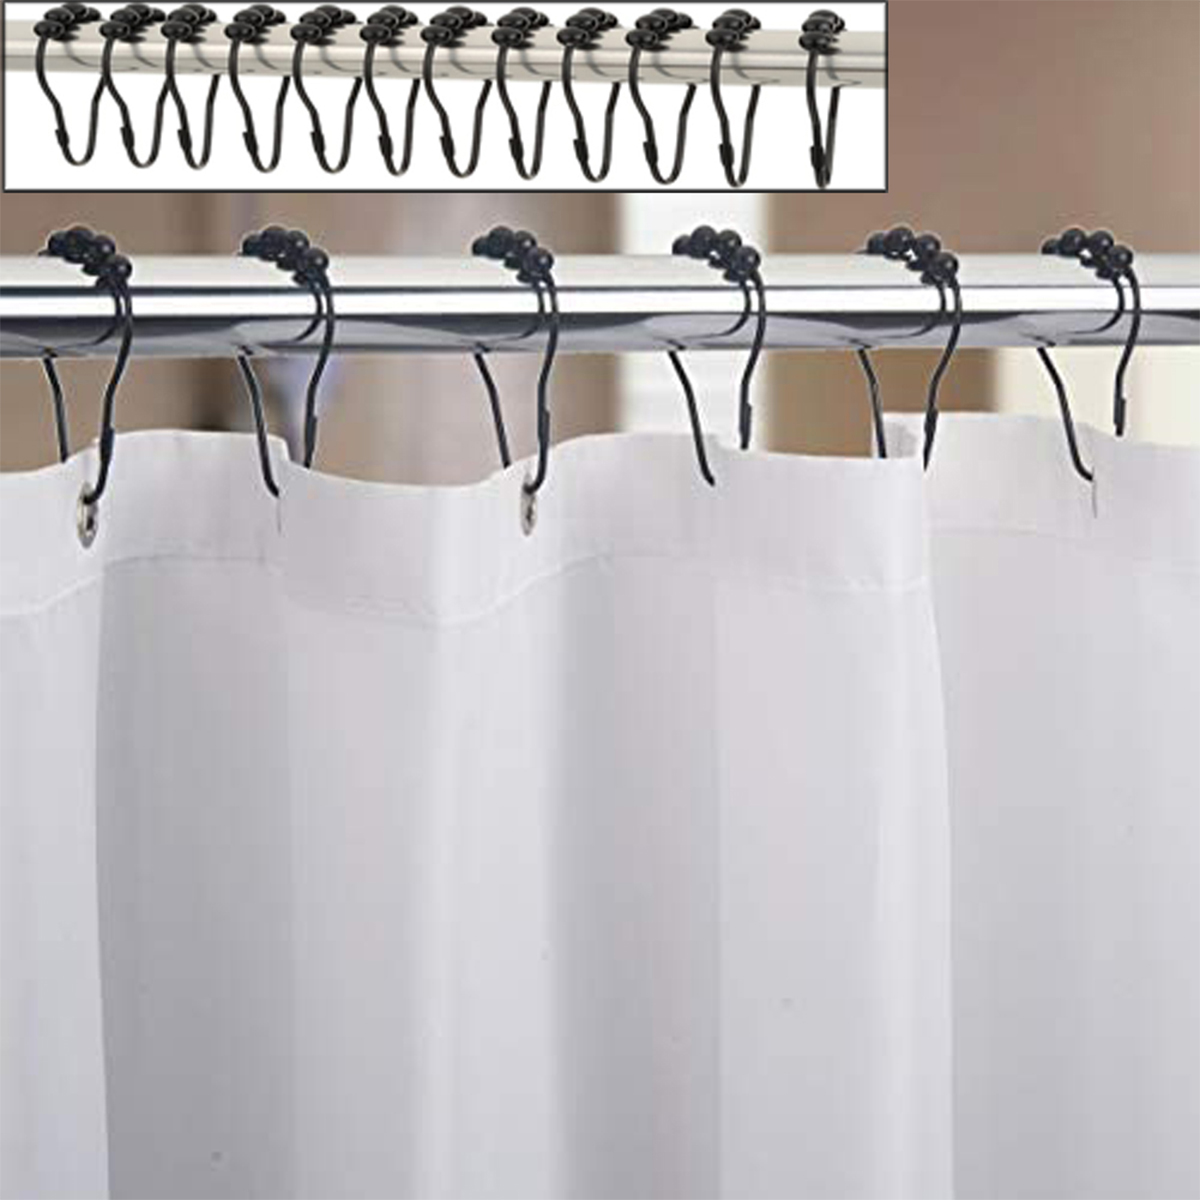 MagiDealMagiDeal Rollerball Shower Curtain Hooks Tieback Bathroom Shell Hanger 